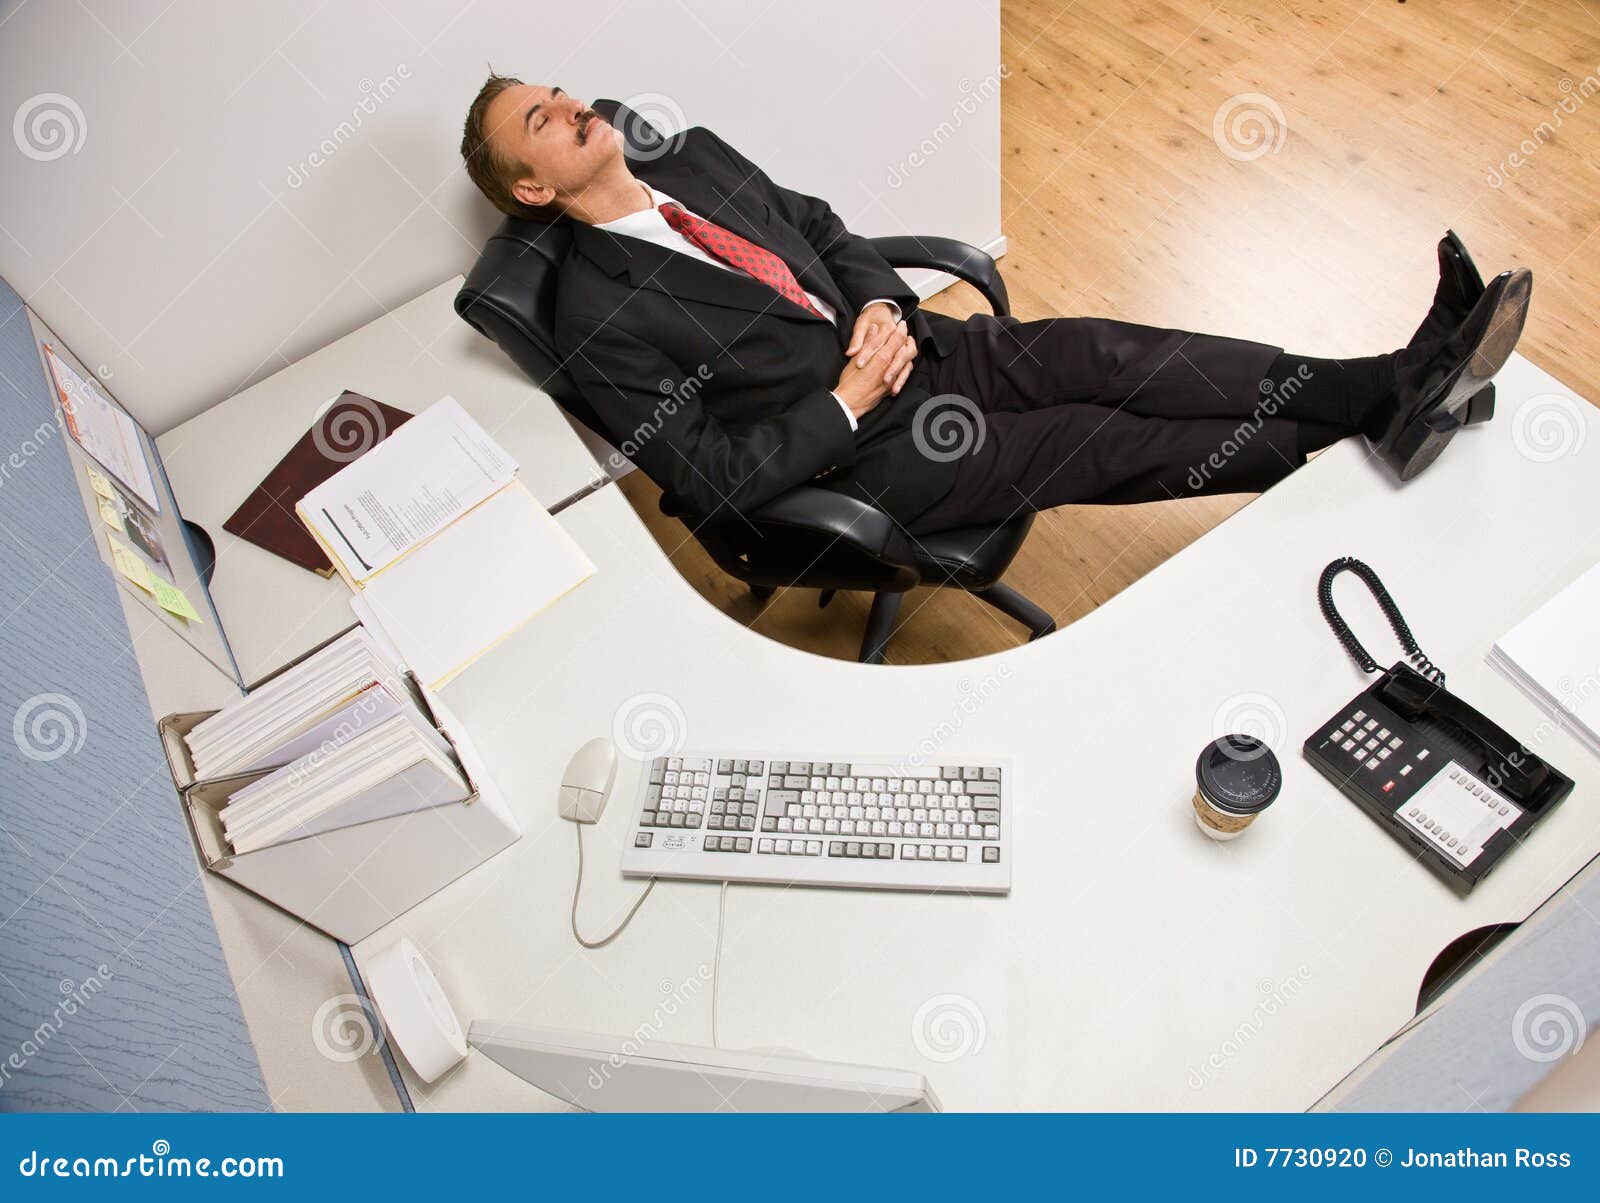 businessman-sleeping-desk-feet-up-7730920.jpg